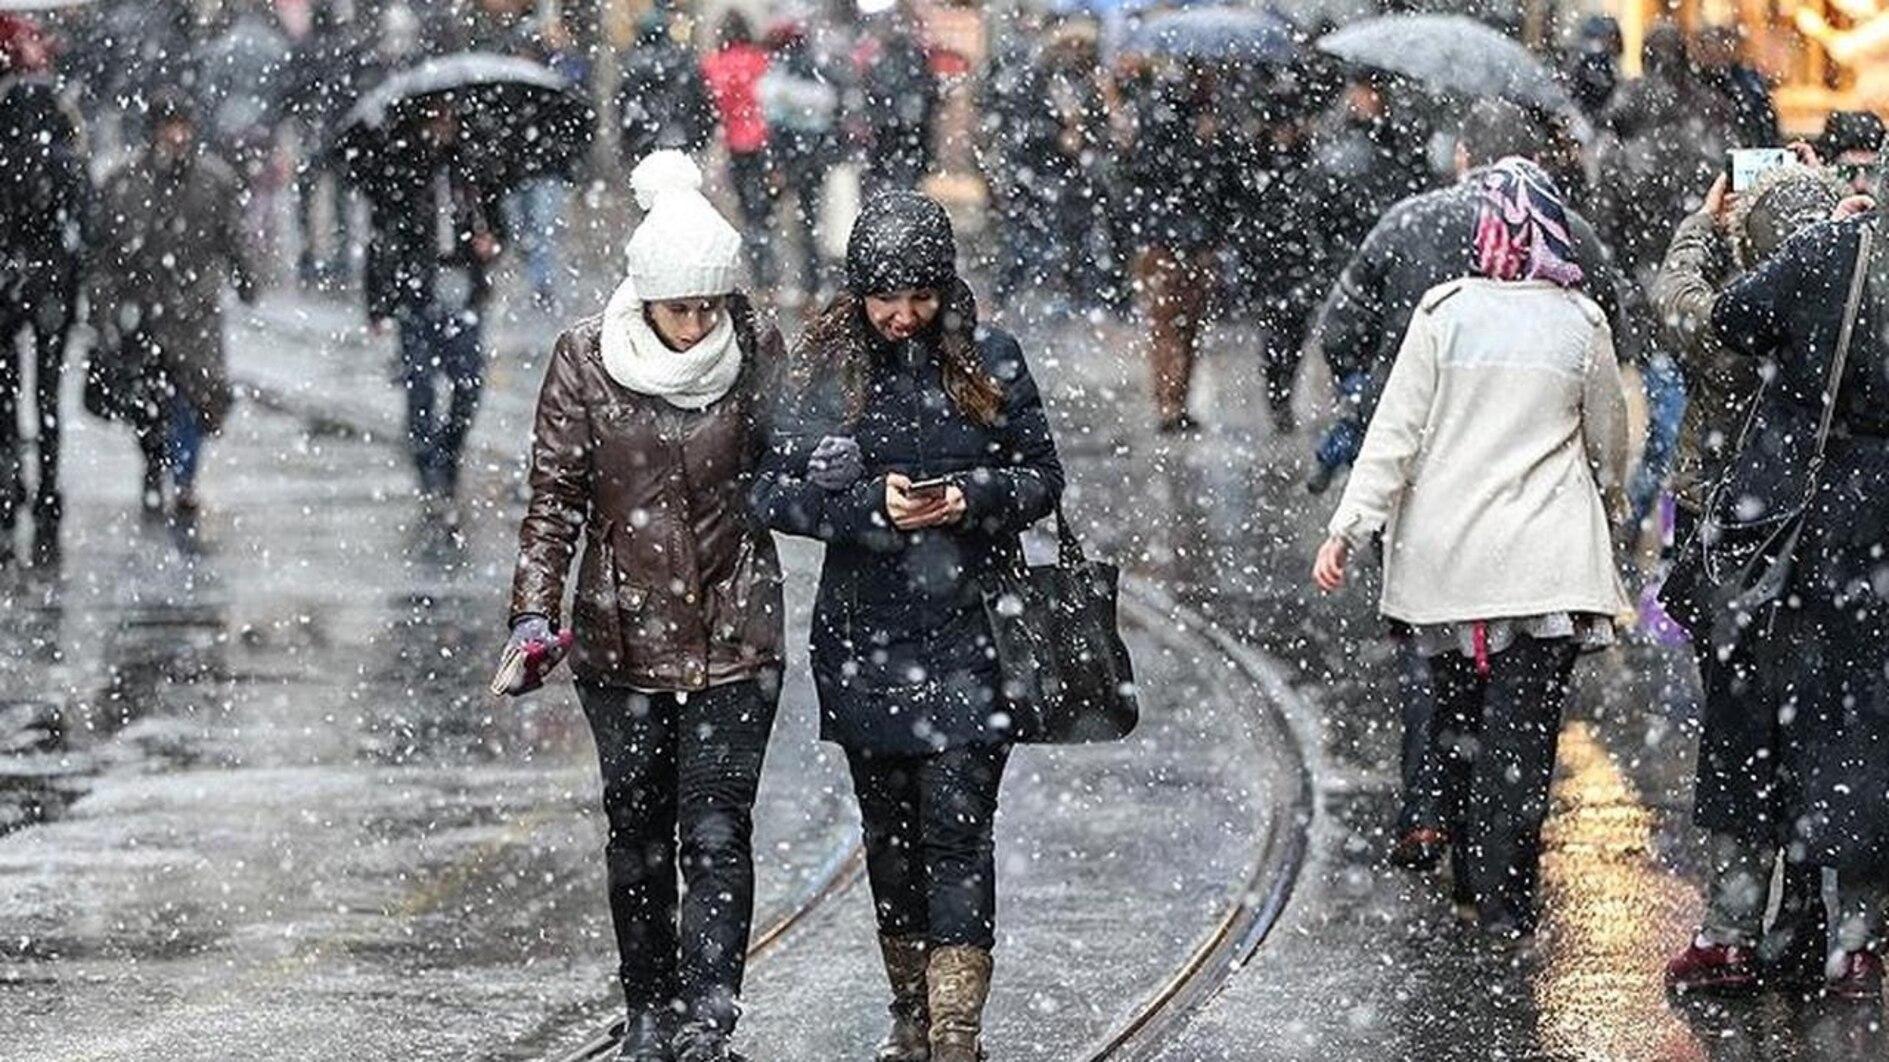 Istanbul is medio januari getuige van sneeuwval: expert